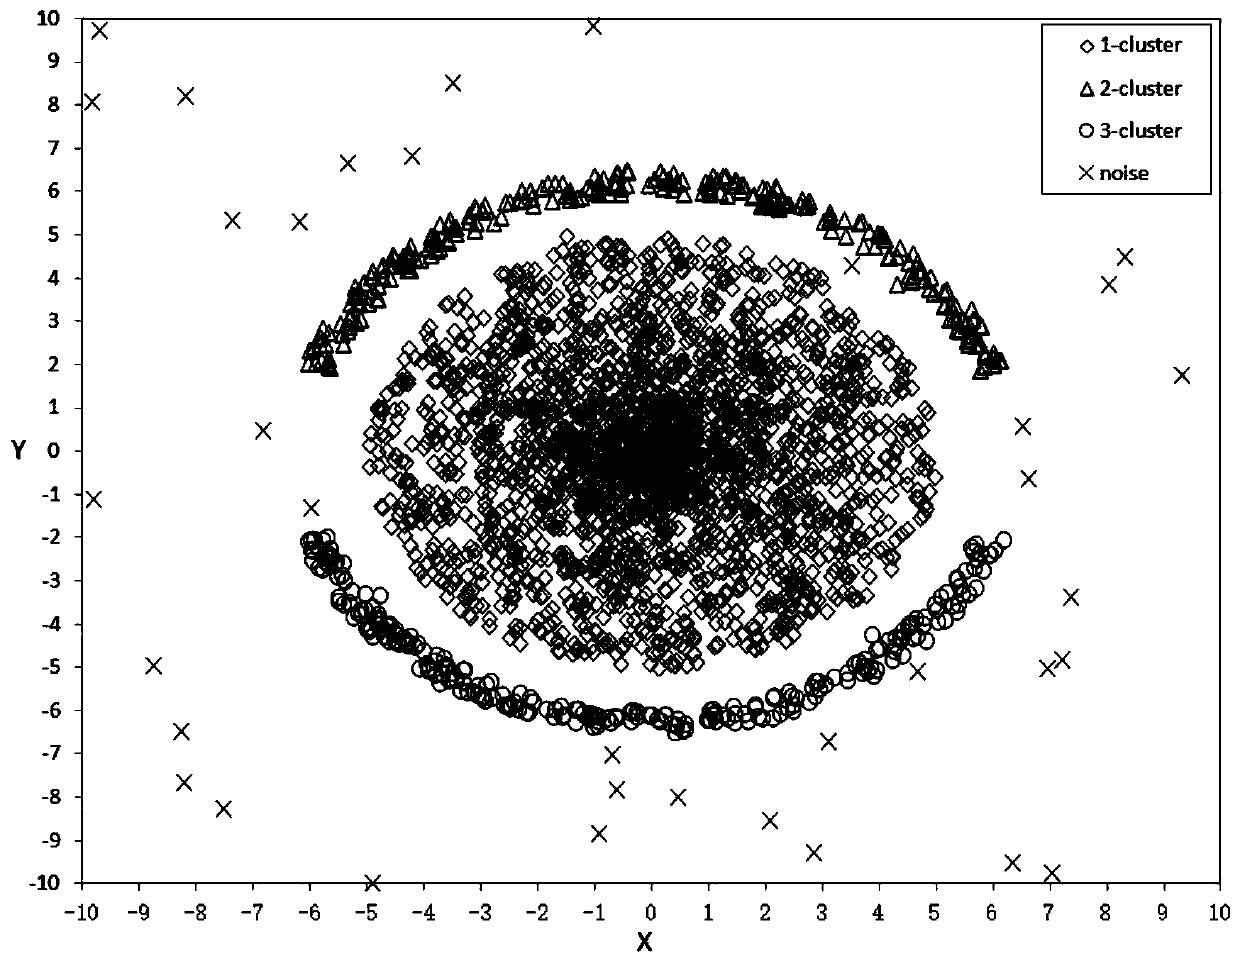 Multi-source atmospheric data clustering method based on distribution density